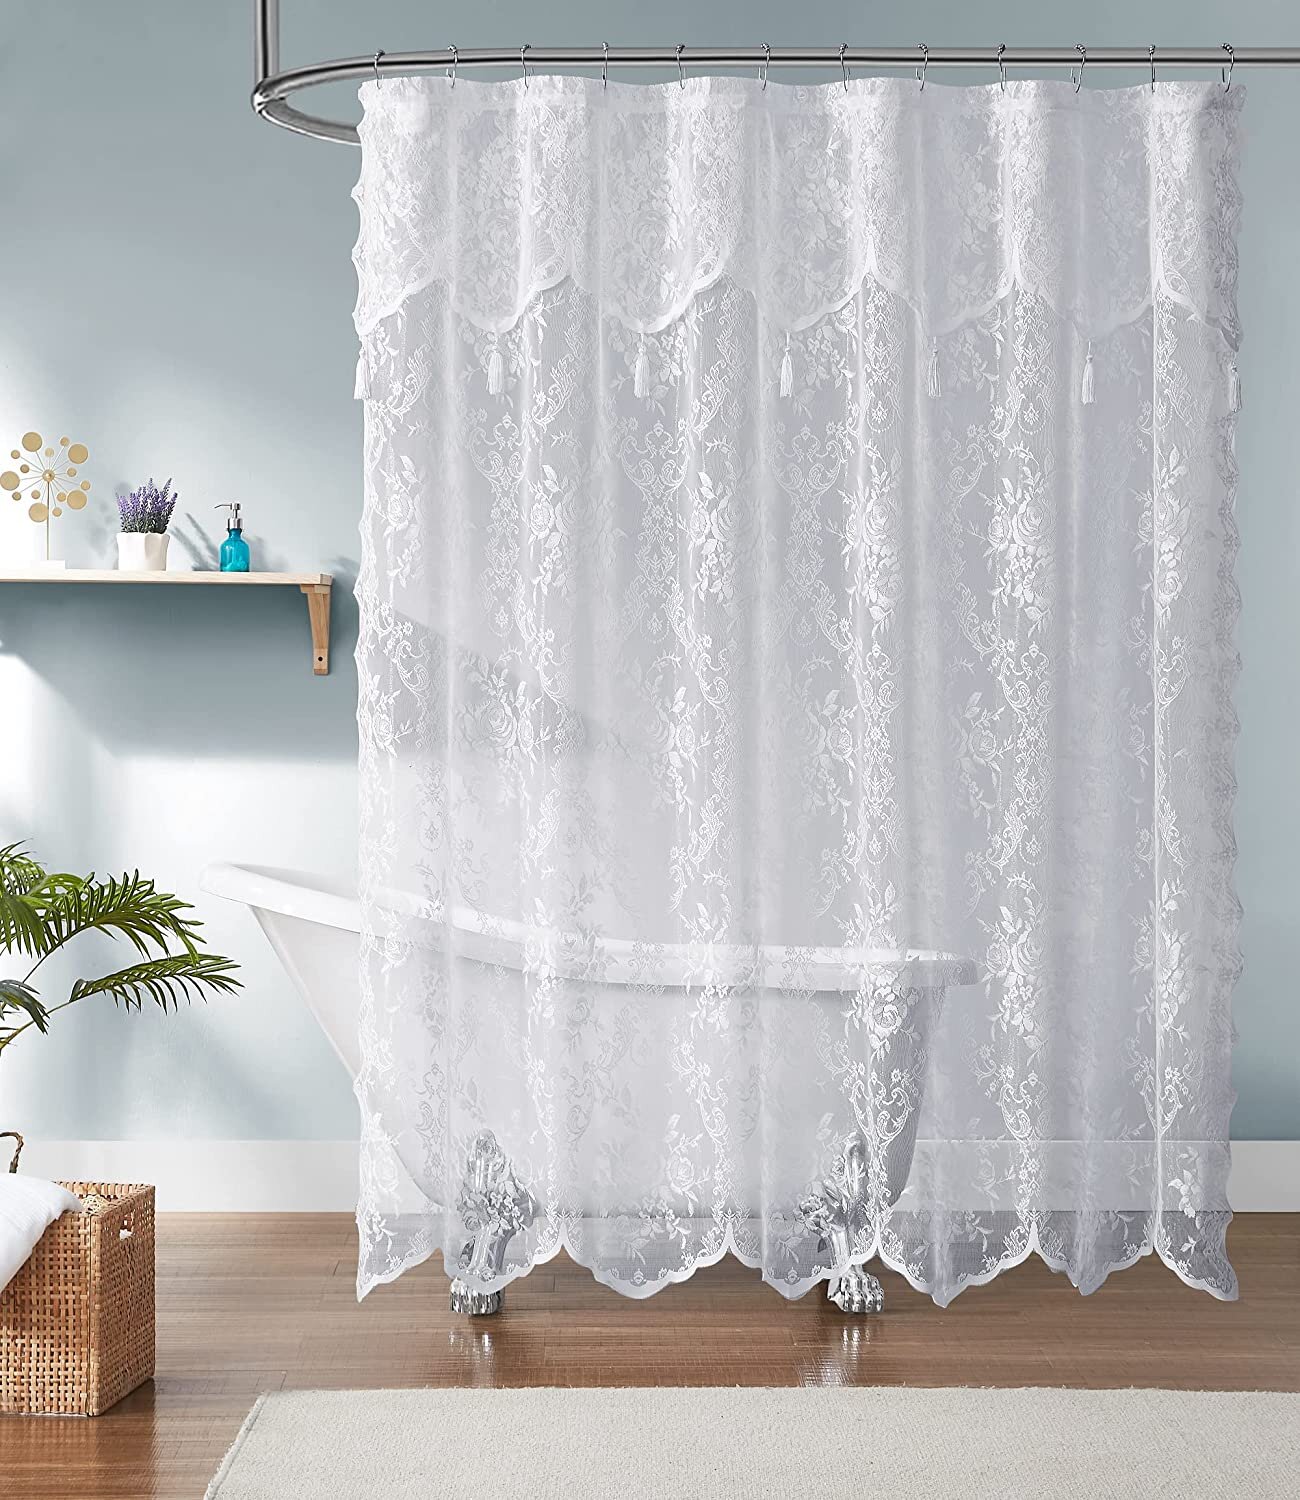 Lv luxury type 11 shower curtain waterproof luxury bathroom mat